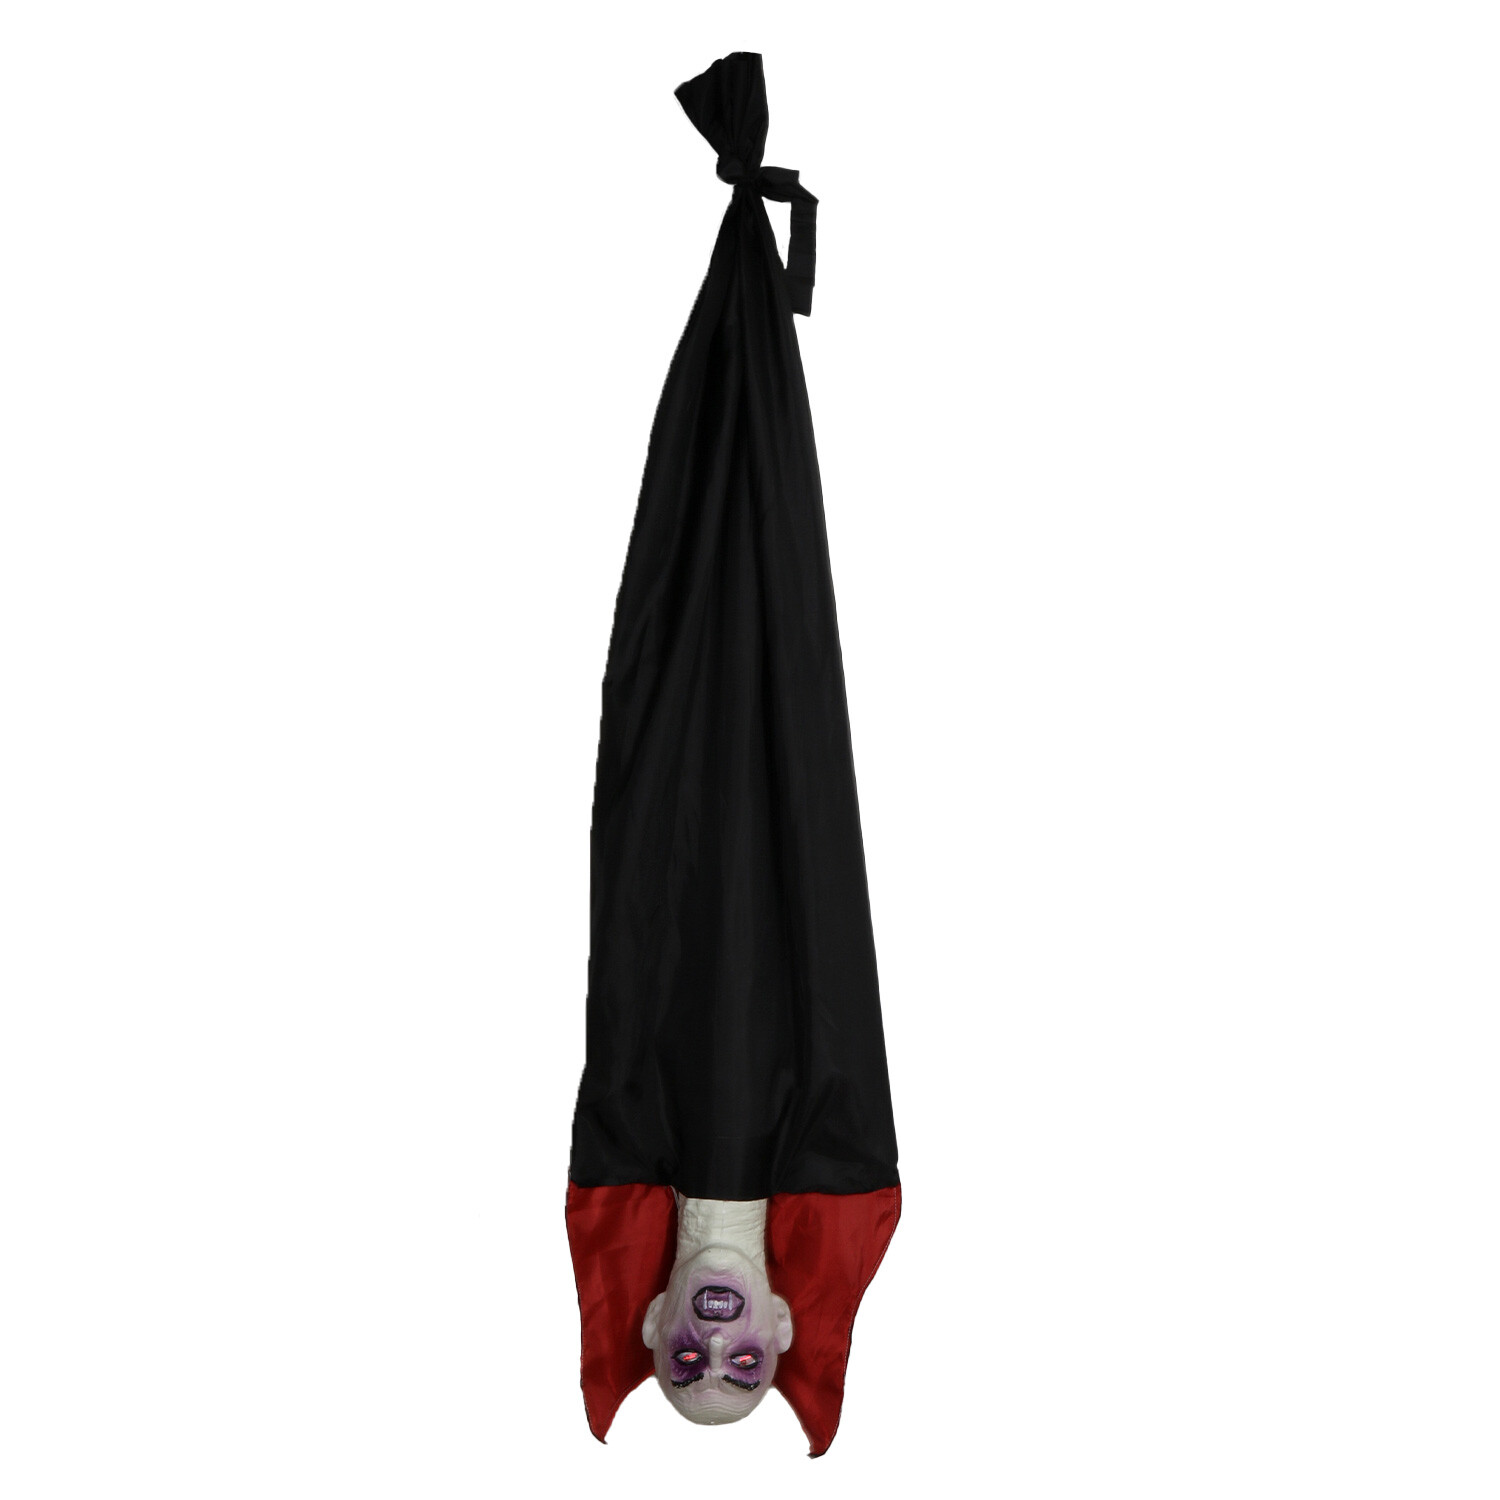 Animated Hanging Vampire - Black Image 1